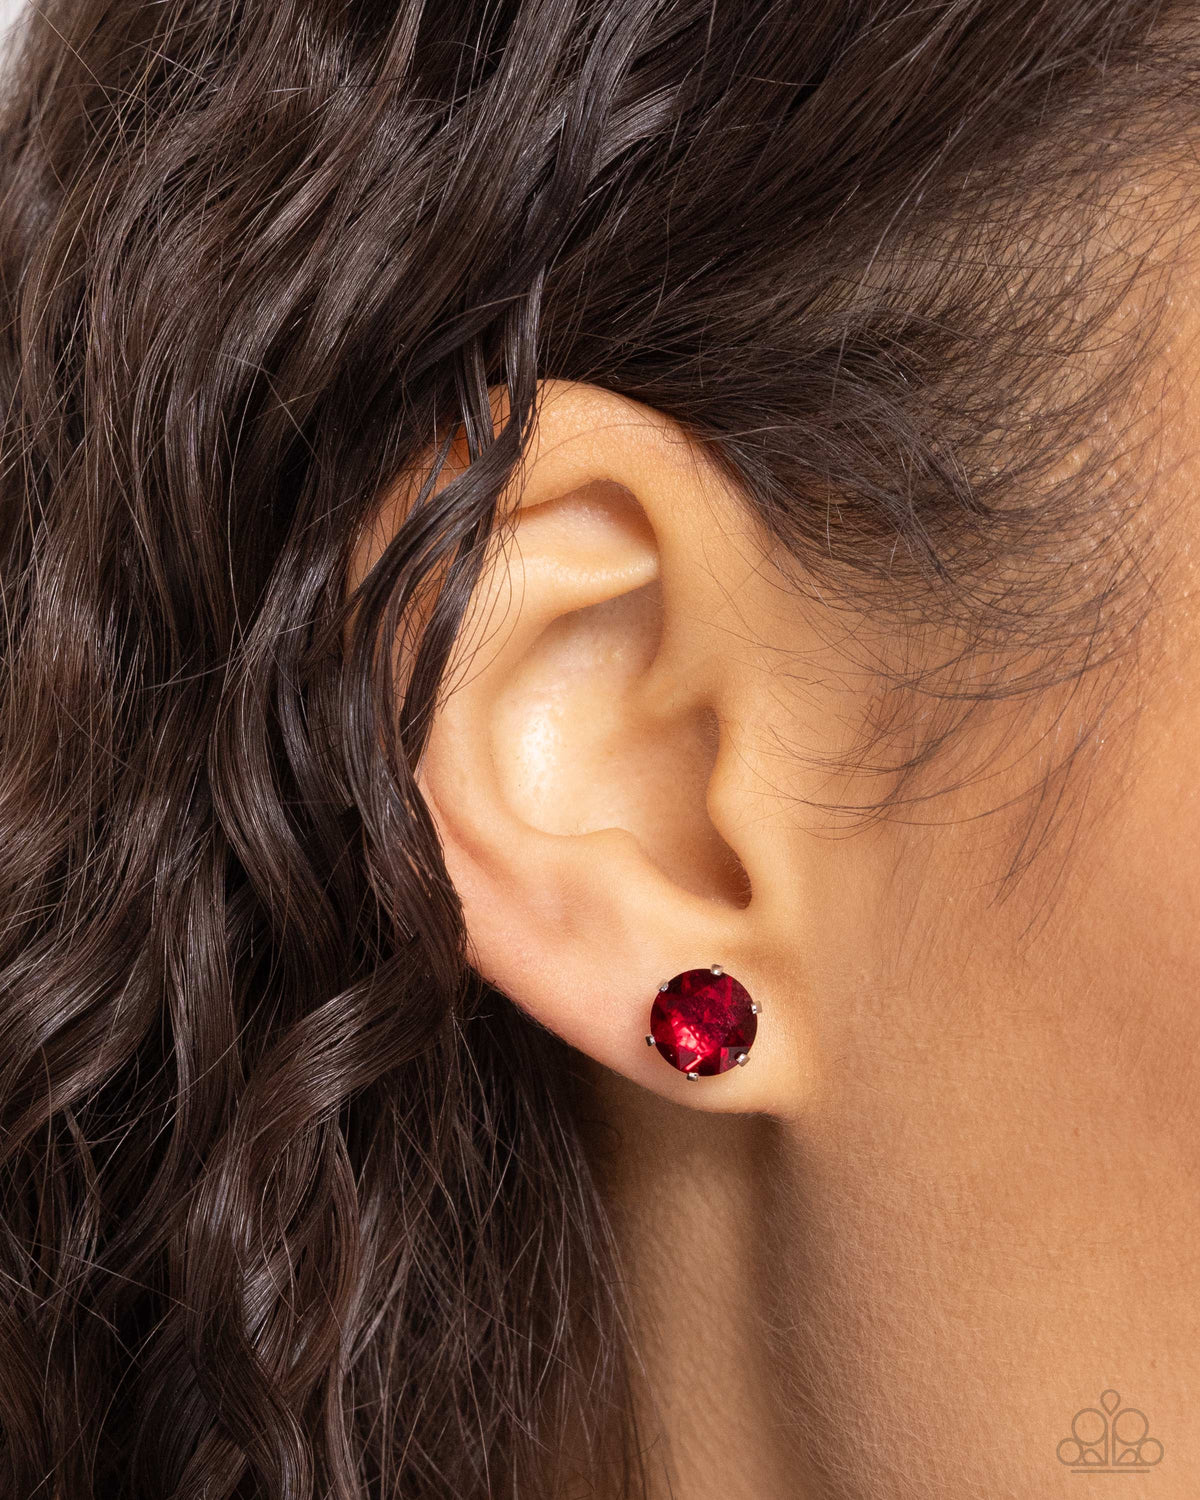 Breathtaking Birthstone (January) Garnet Red Rhinestone Earrings - Paparazzi Accessories-on model - CarasShop.com - $5 Jewelry by Cara Jewels